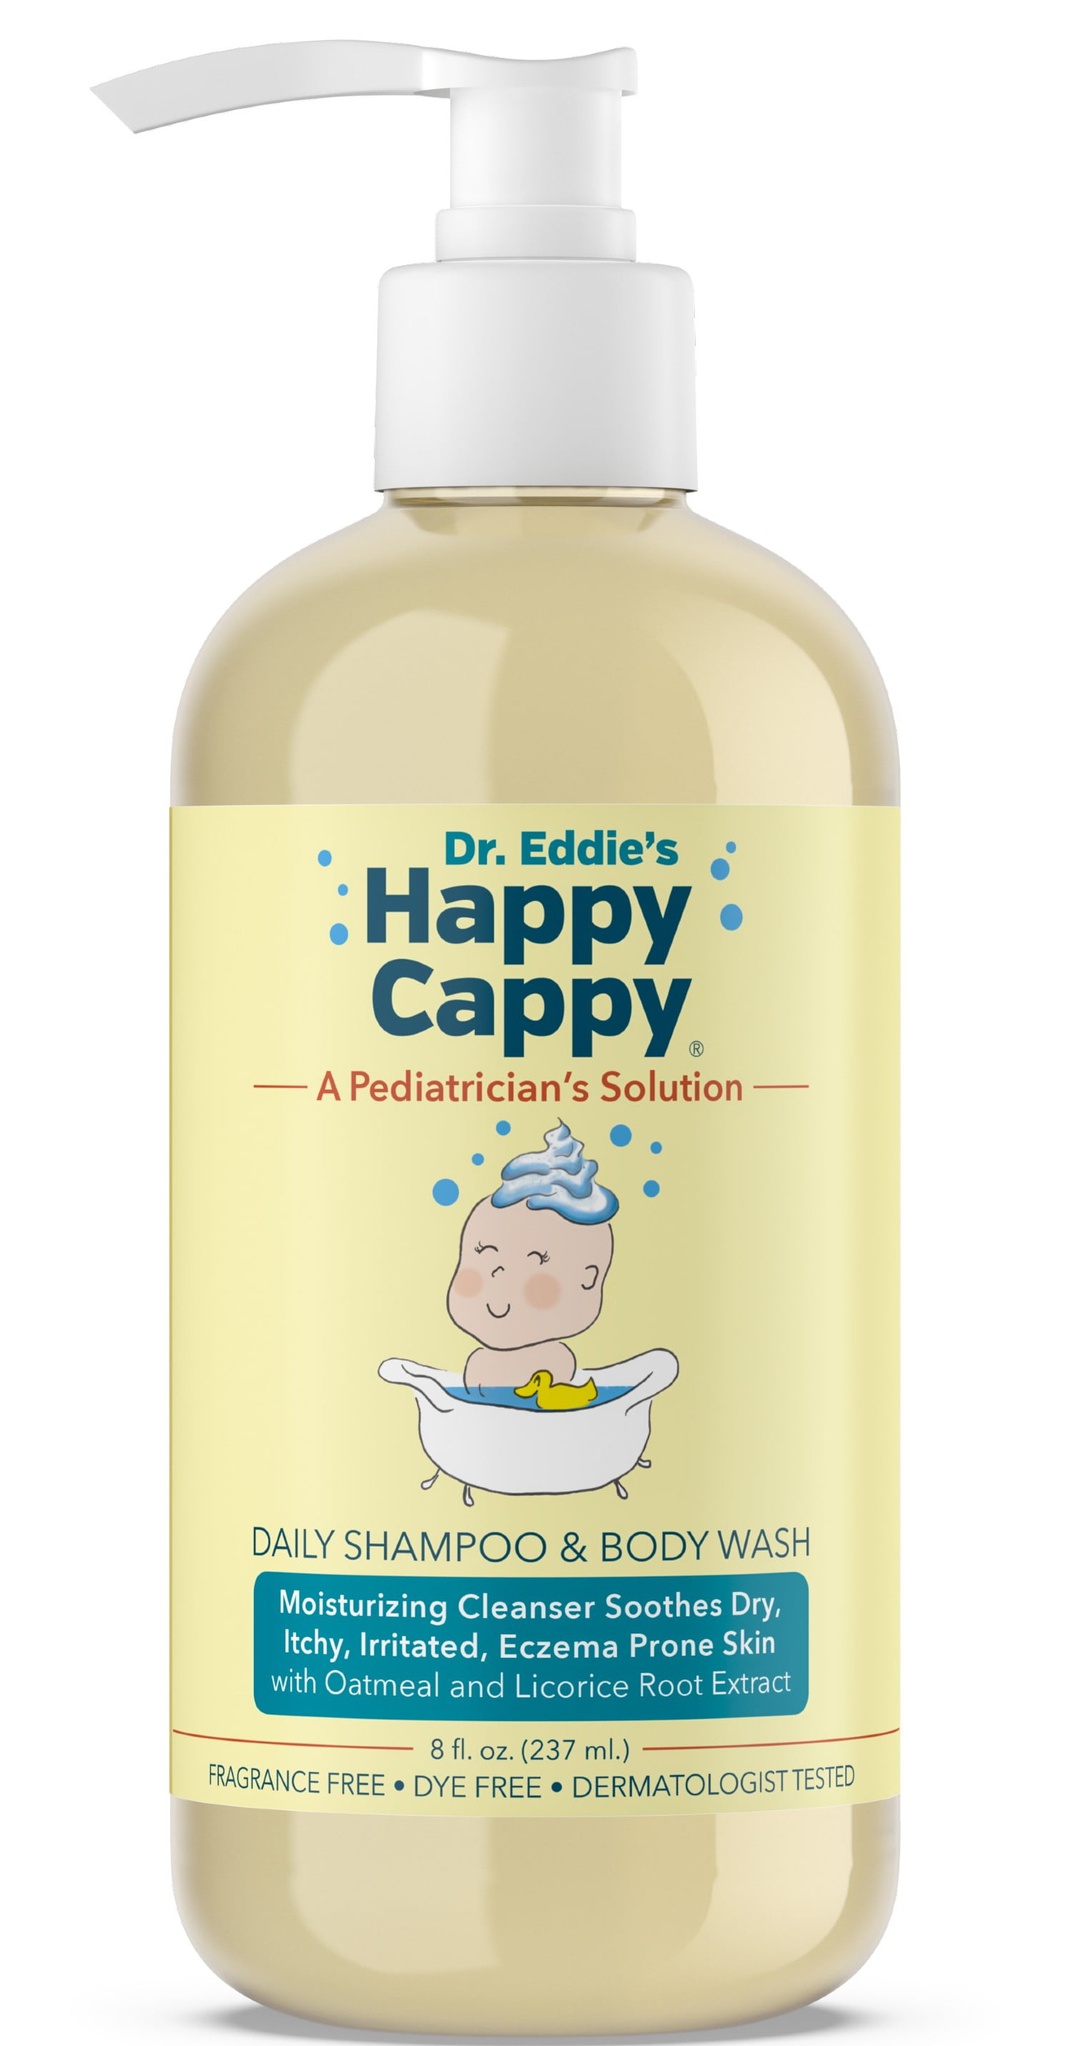 Dr. Eddie's Happy Cappy Daily Shampoo And Body Wash For Dry, Itchy, Eczema Prone Skin